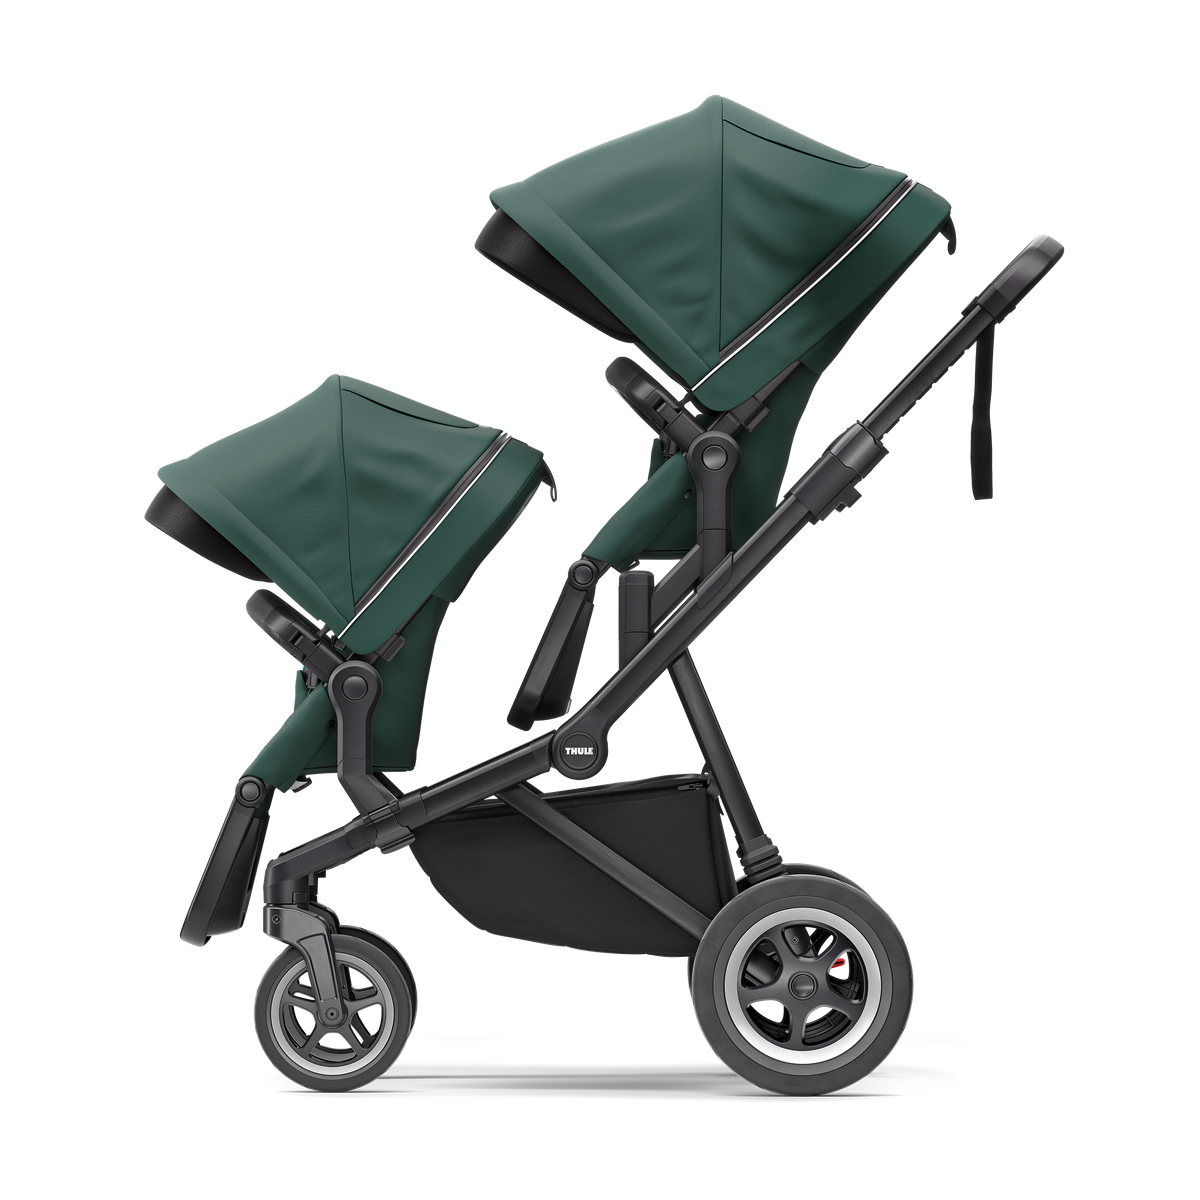 Thule Sleek city stroller mallard green on black